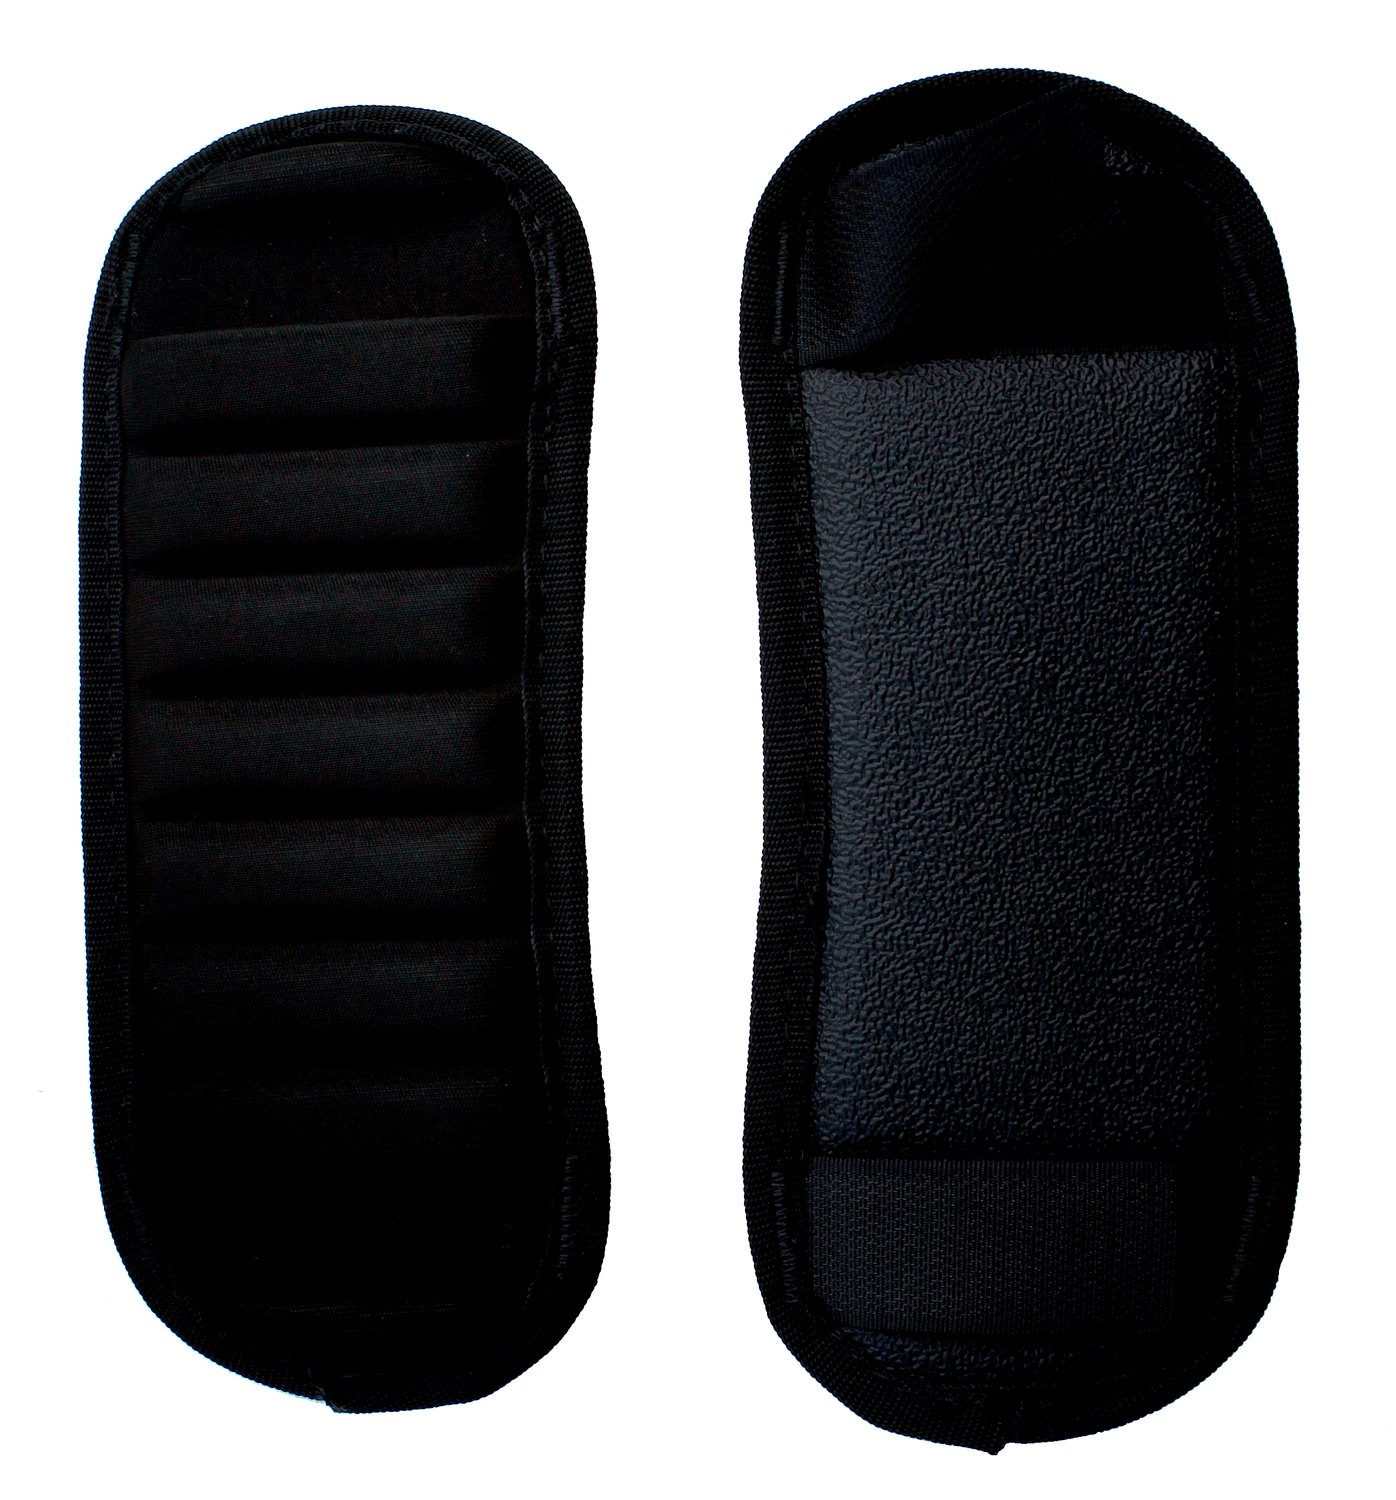 7010595610 - 3M DBI-SALA Comfort Shoulder Pad For Harness 9502006, Hook and Loop